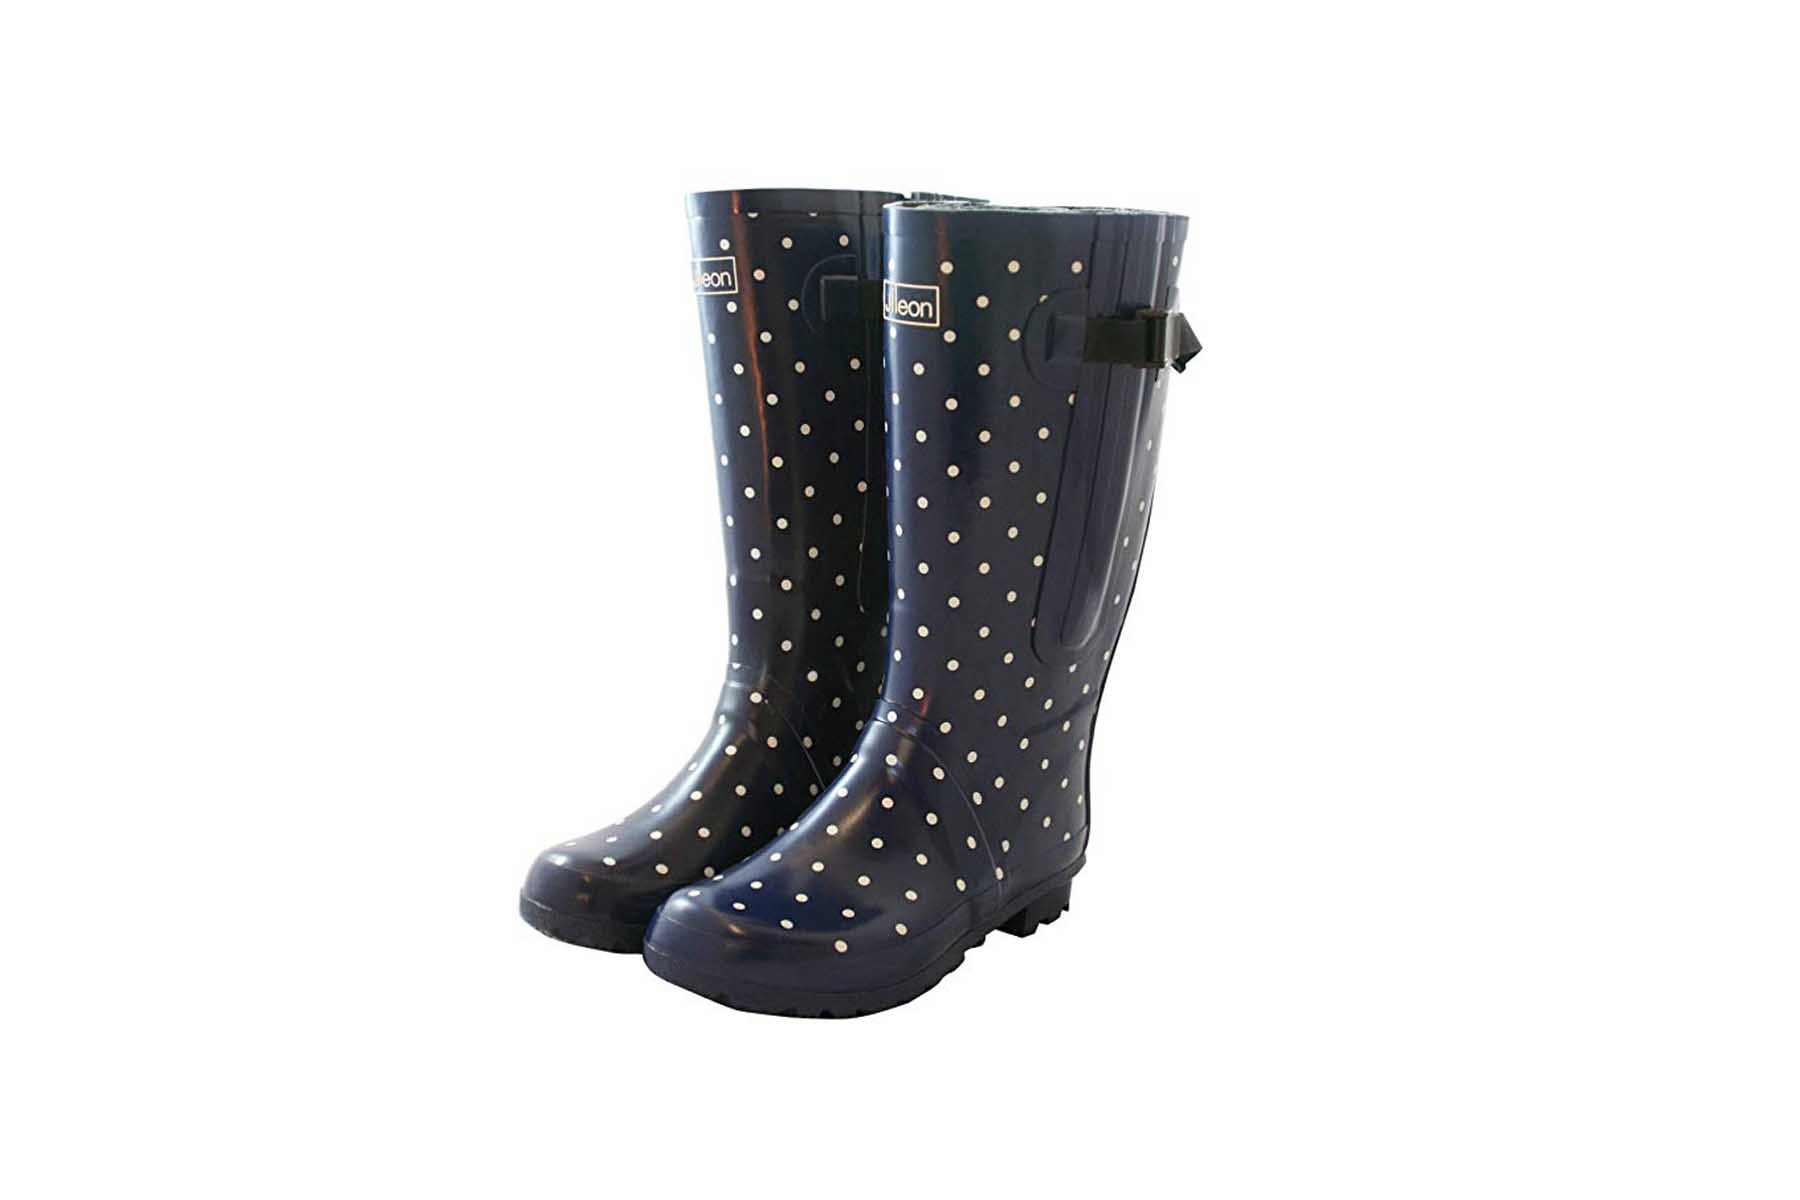 womens wide calf rain boots